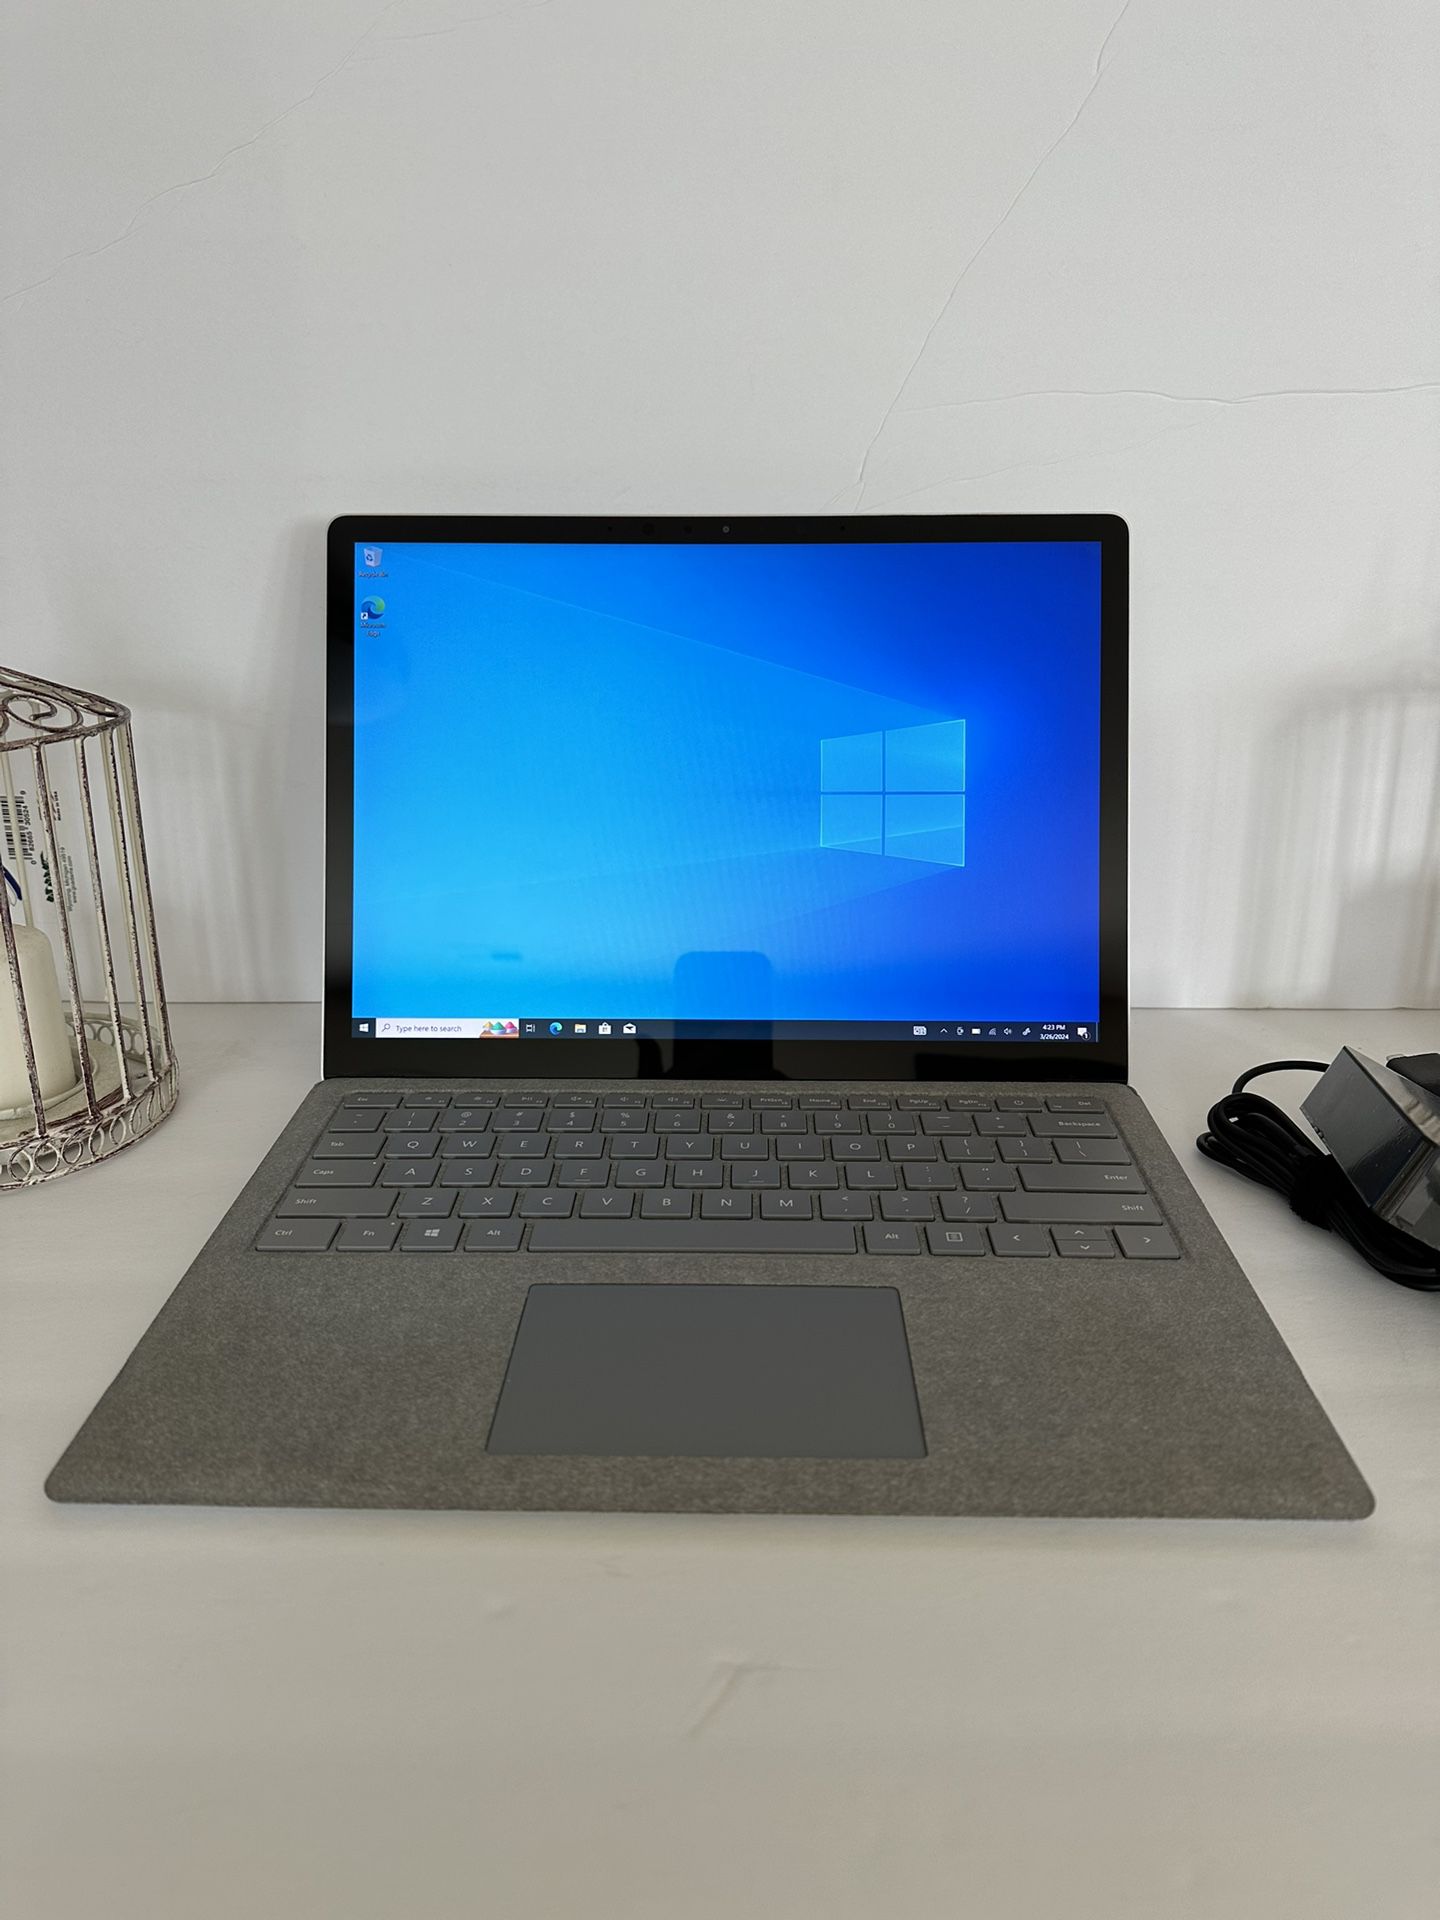 Microsoft Surface laptop 2 Model 1769 Core I5 8th Gen 